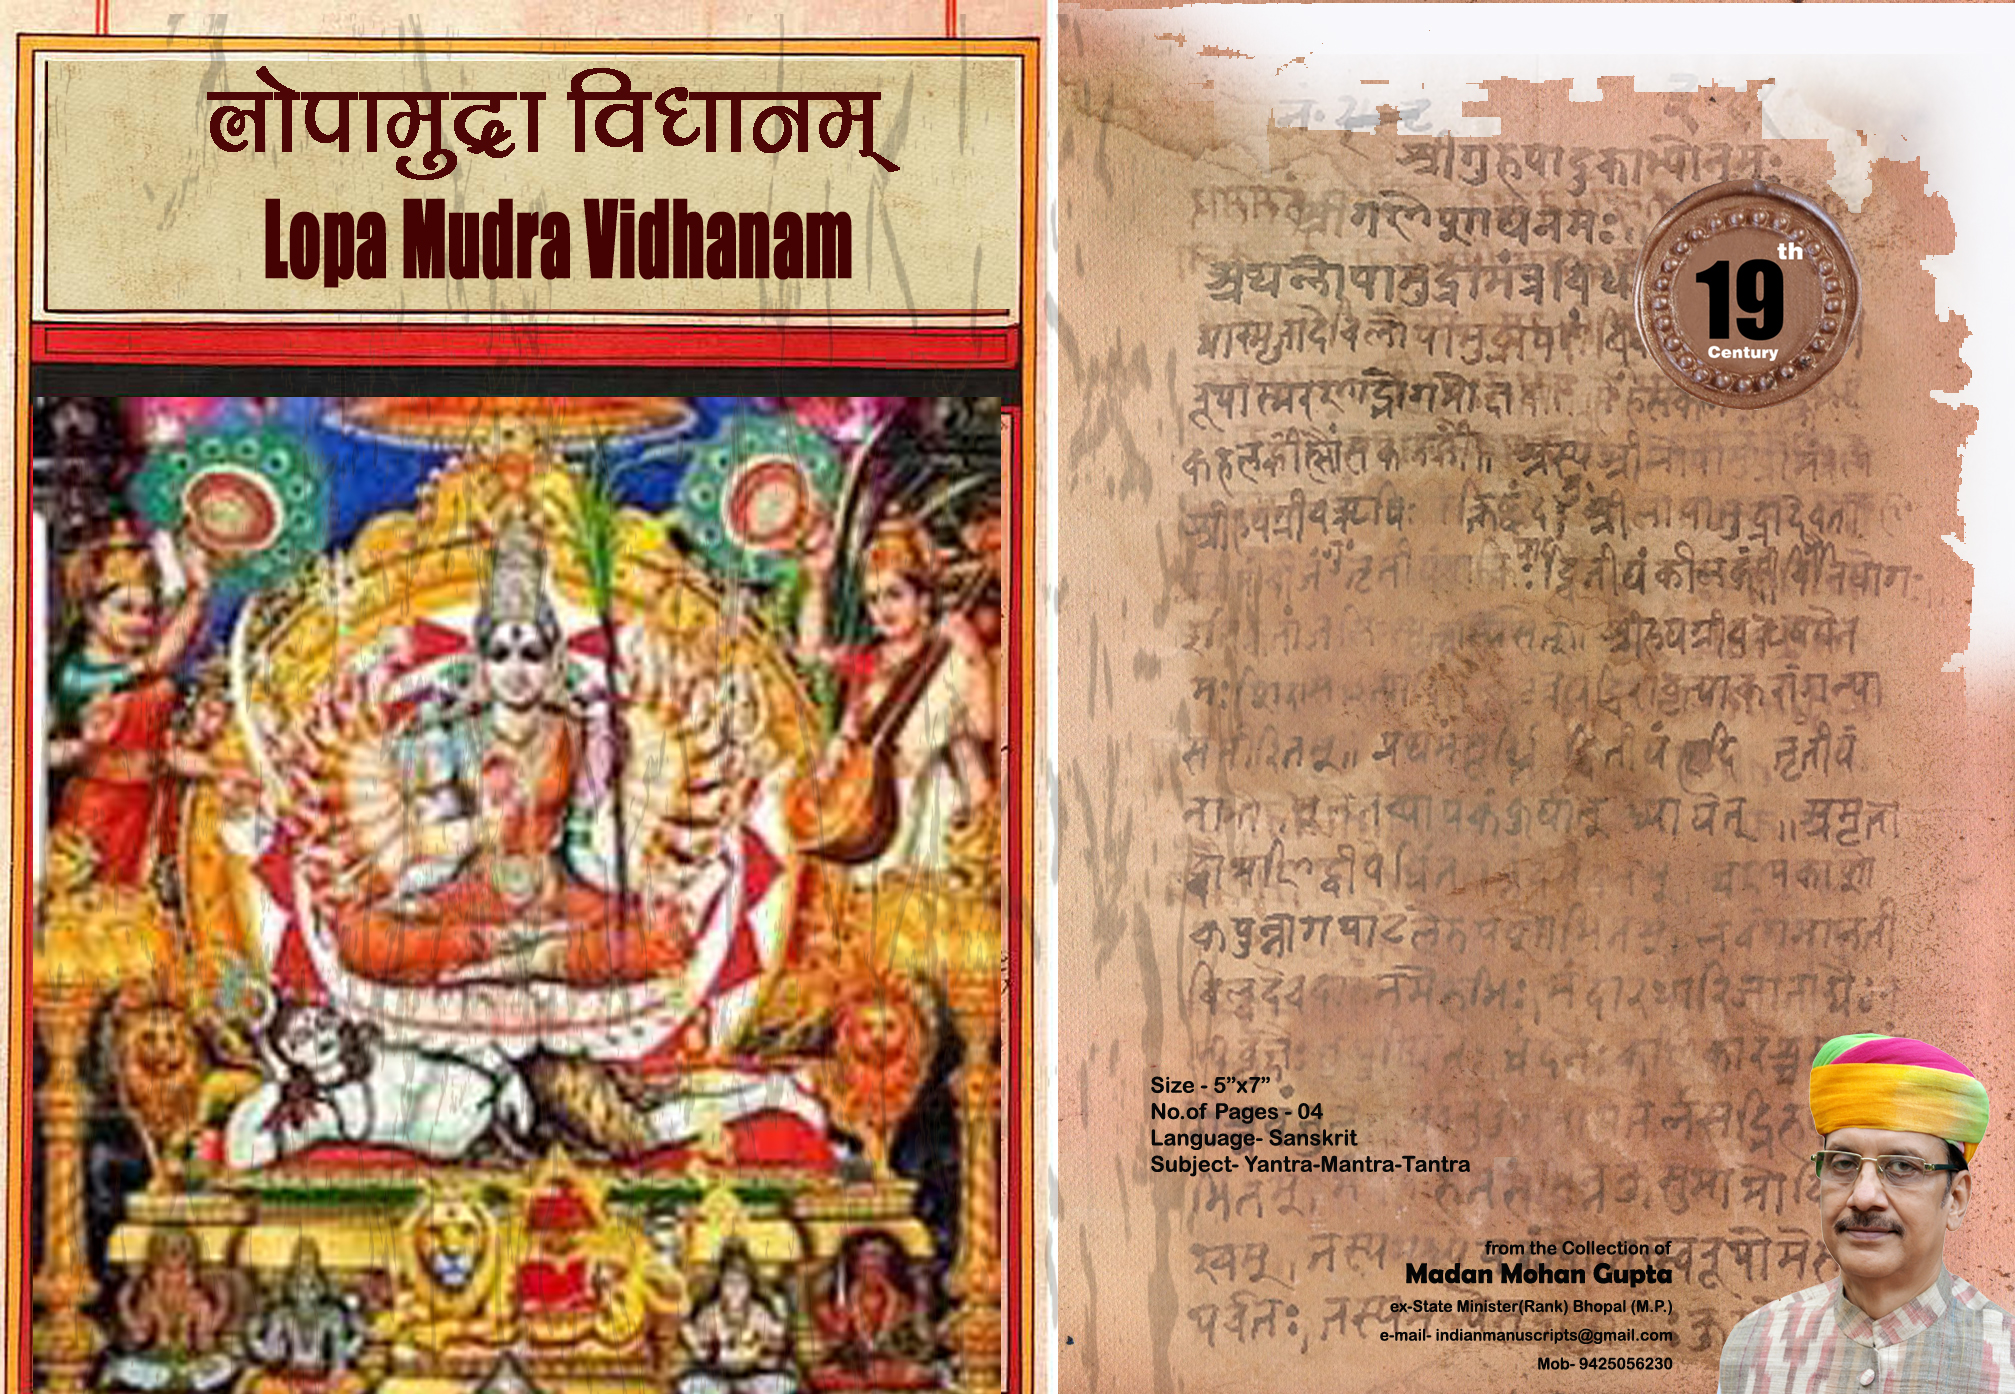 Lopa Mudra Vidhanam